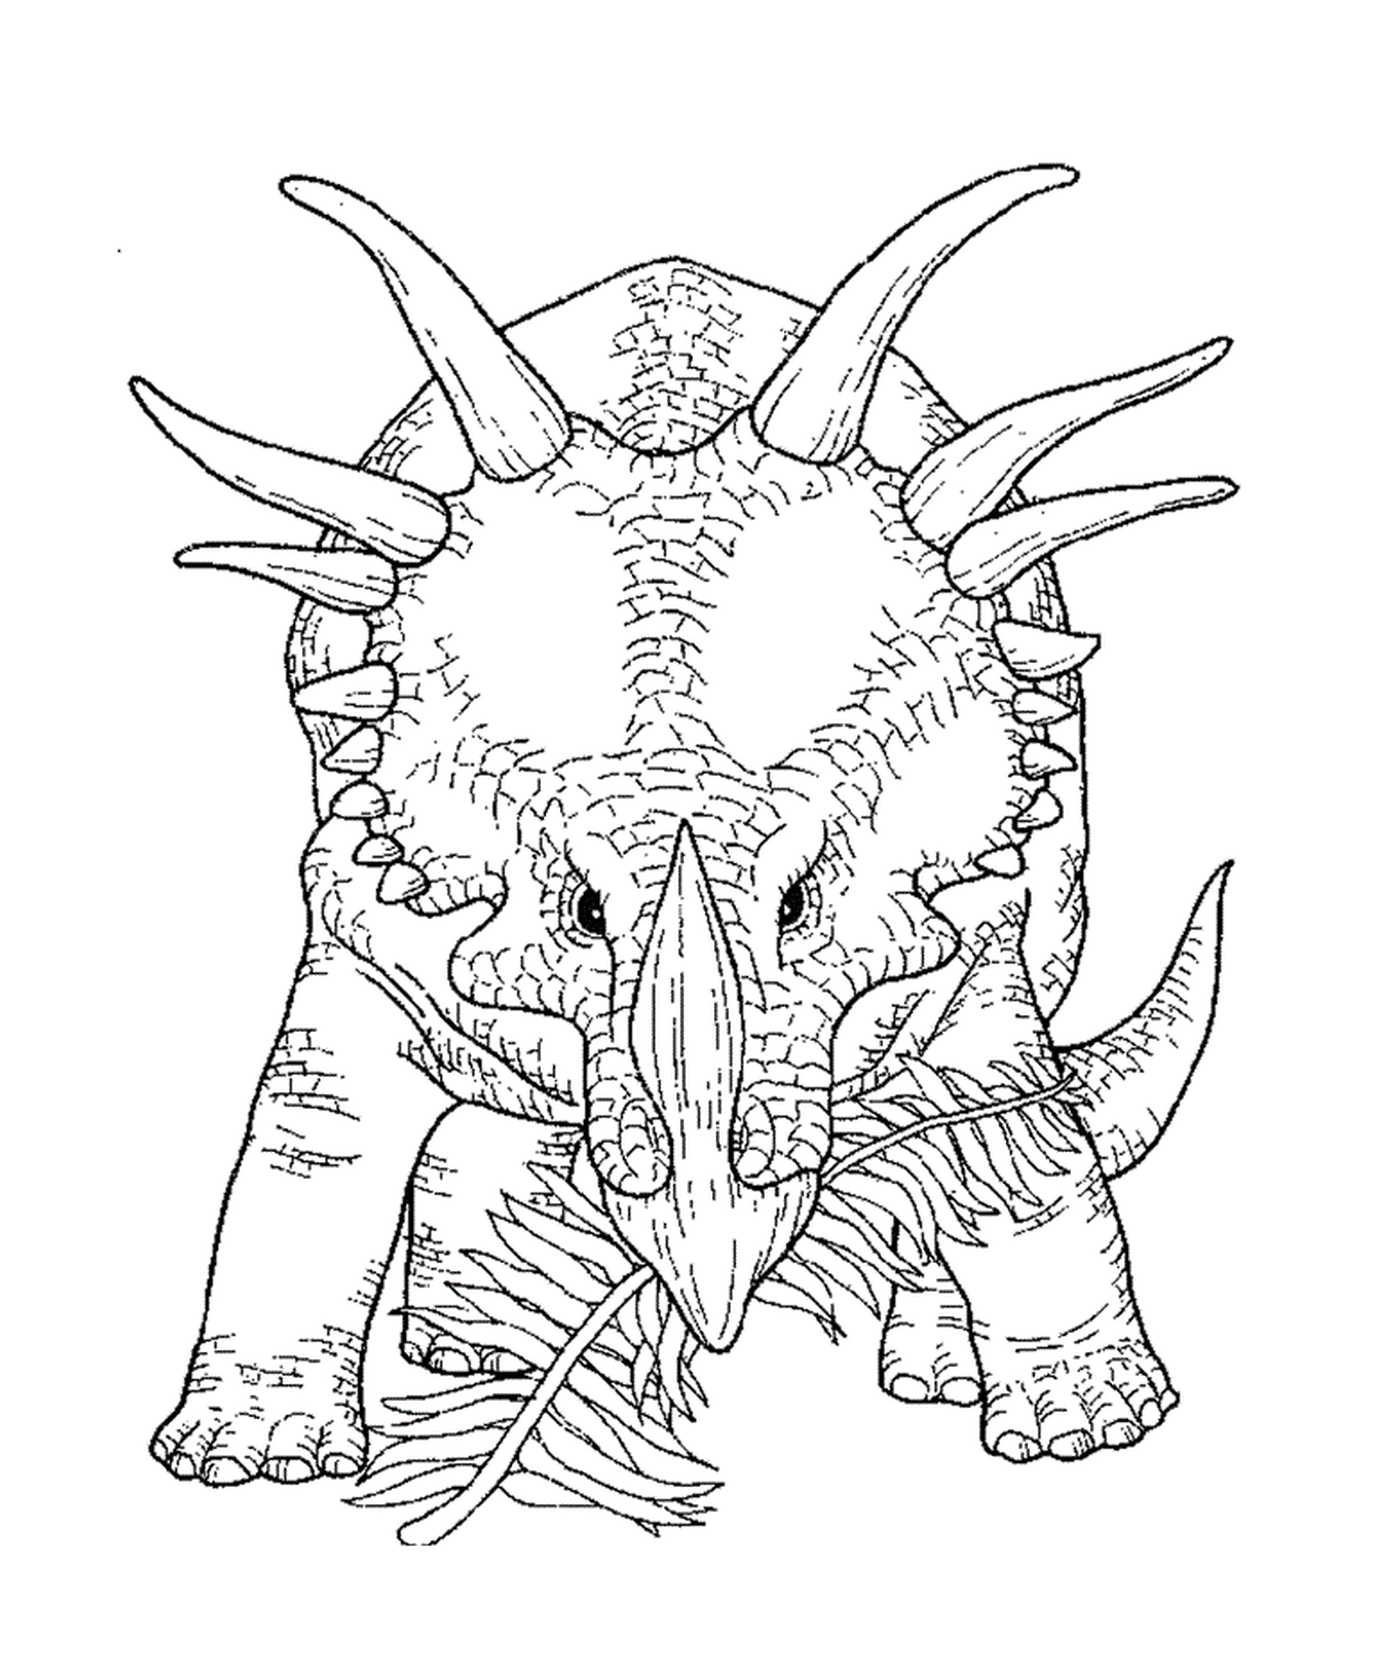   Un tricératops adulte en exposition 